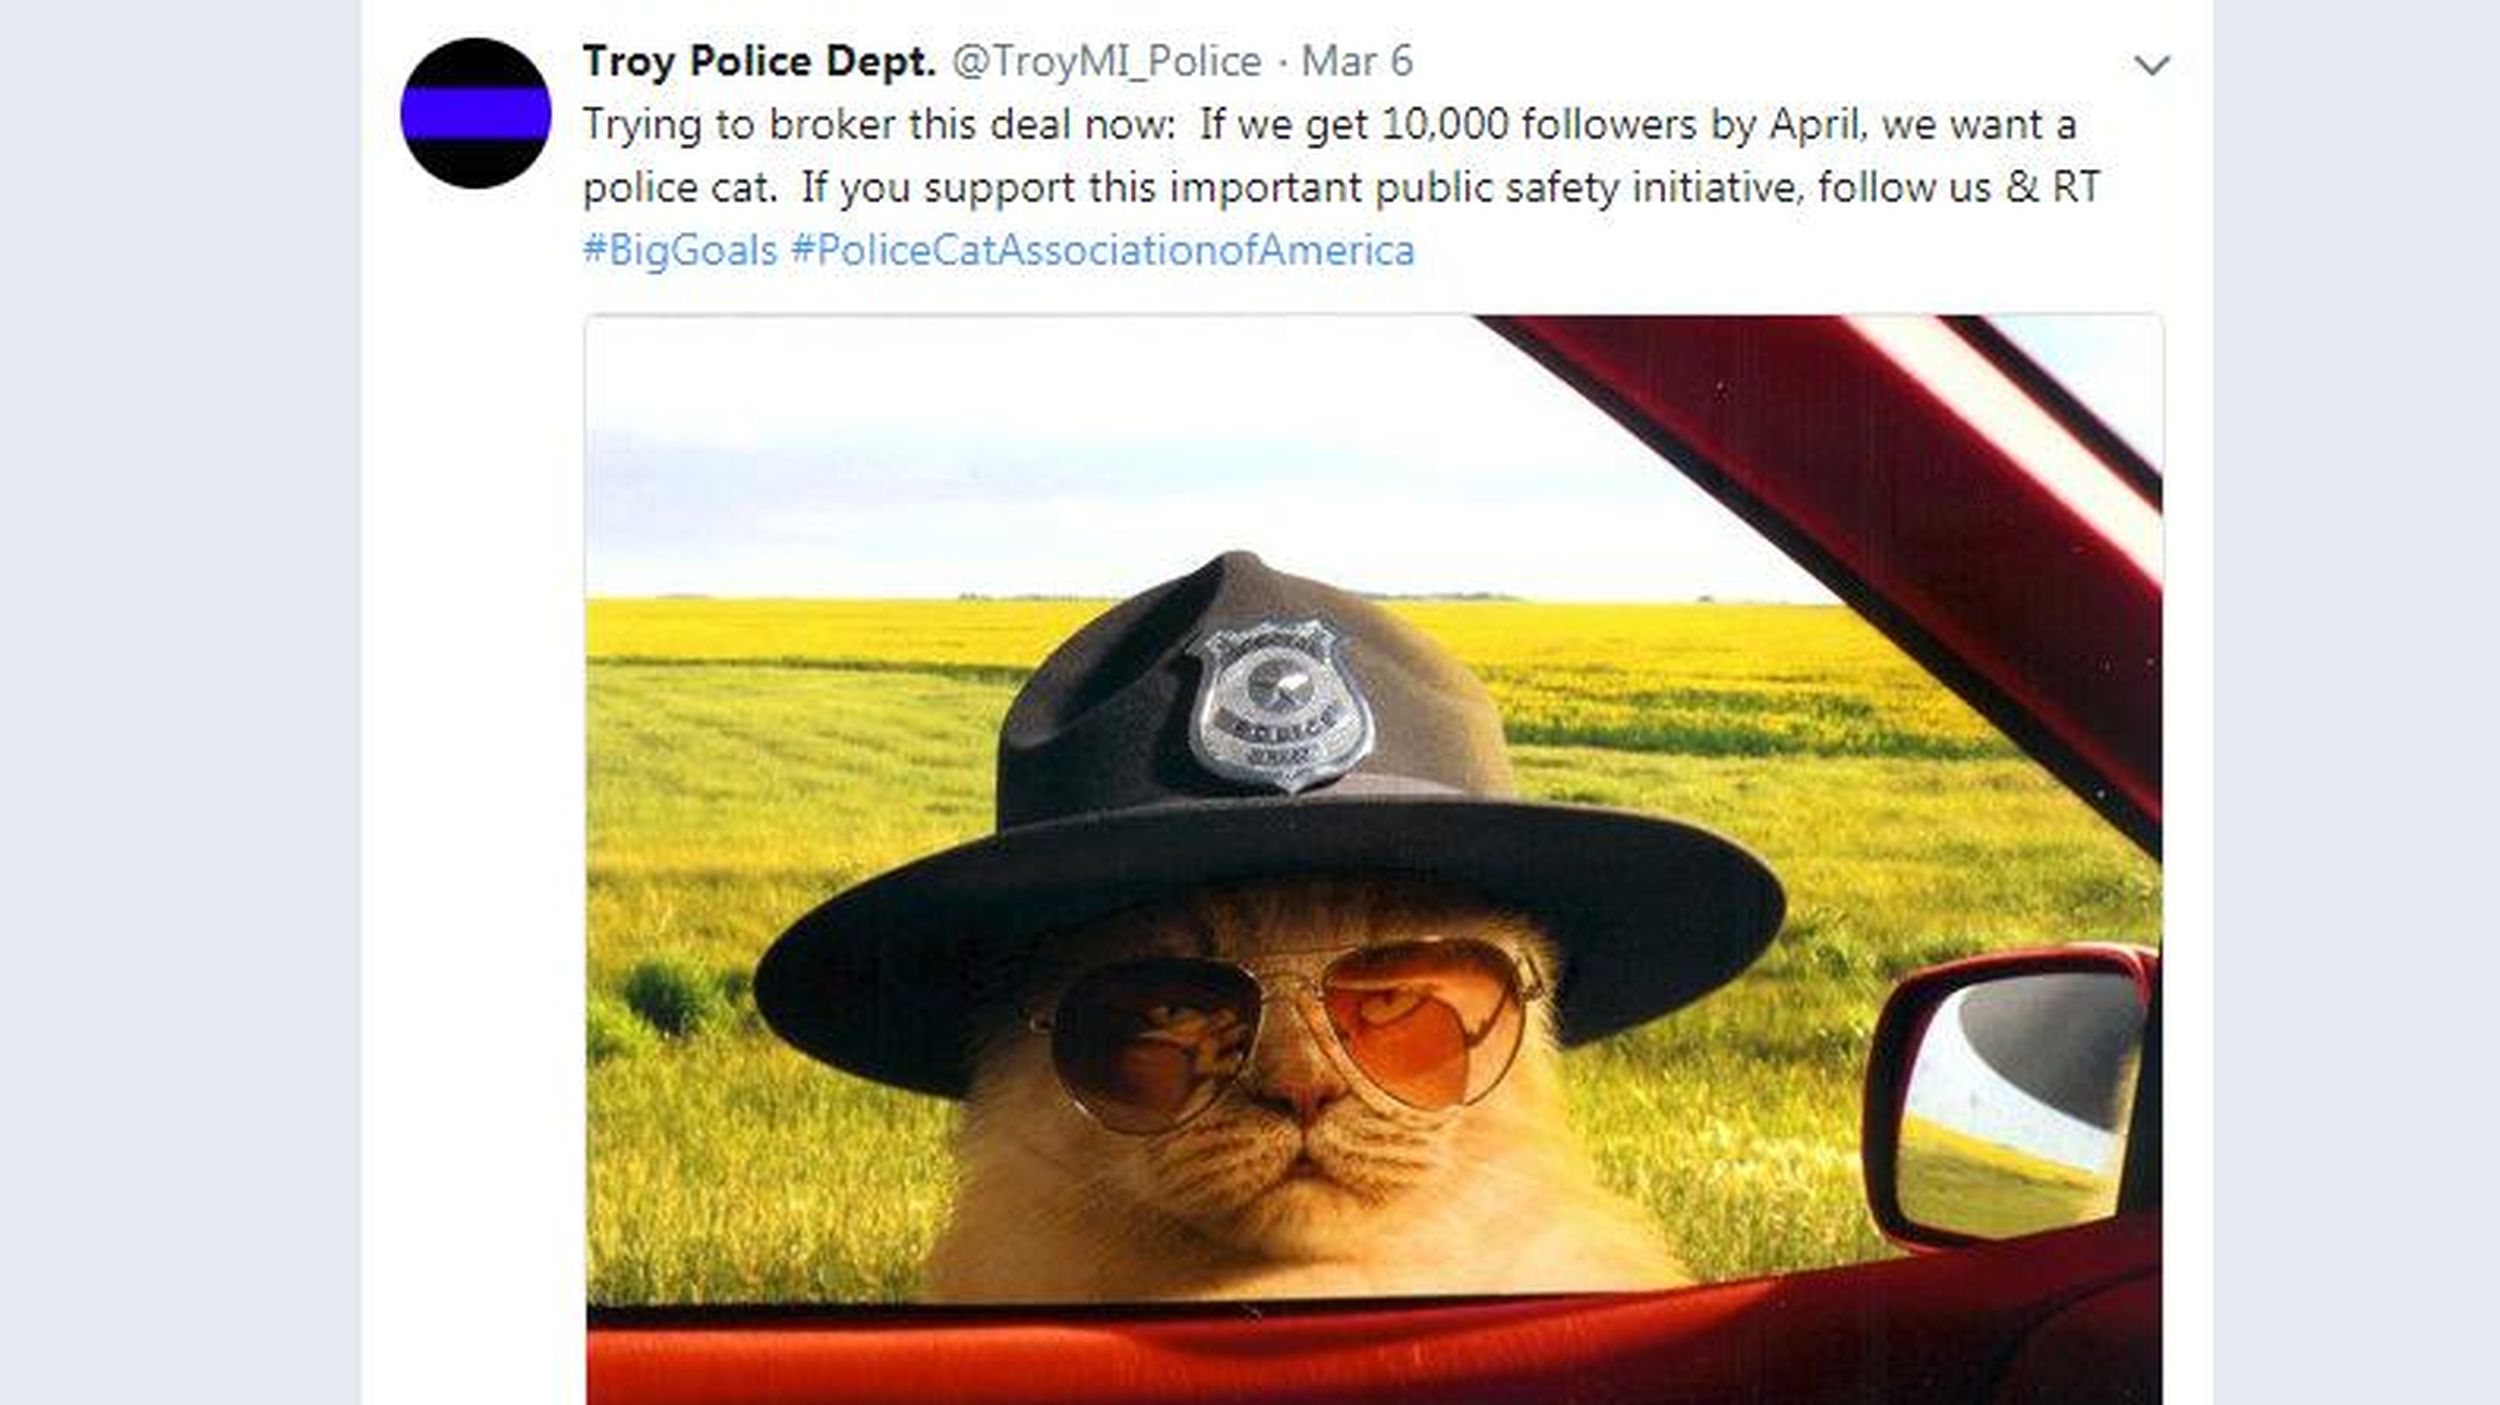 Police cat on way after Michigan department exceeds Twitter challenge